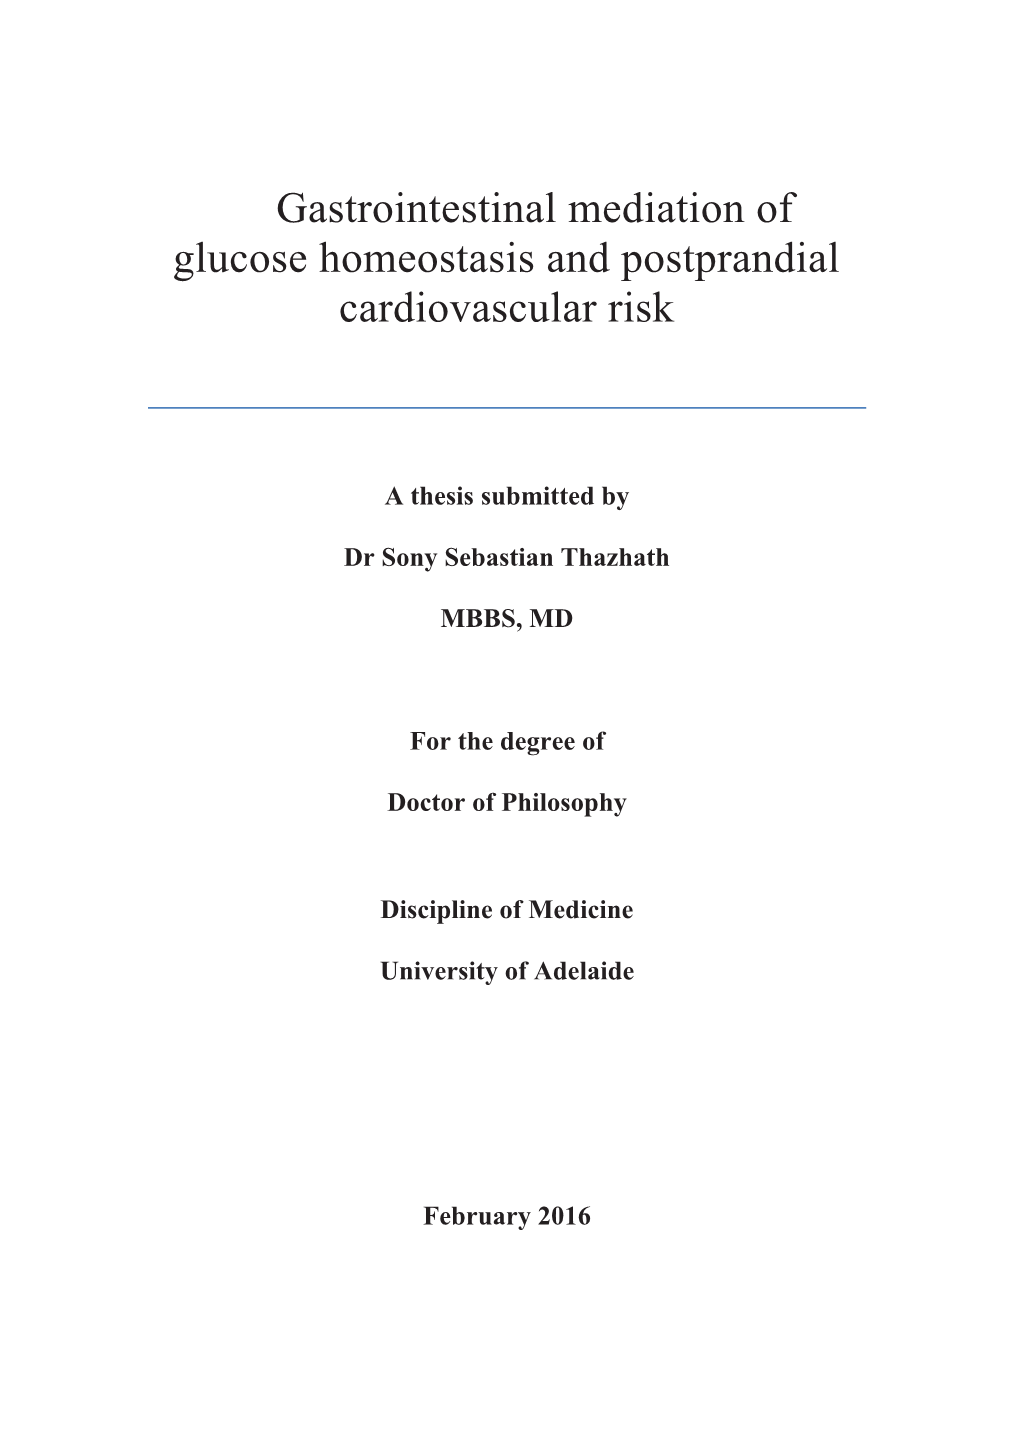 Gastrointestinal Mediation of Glucose Homeostasis and Postprandial Cardiovascular Risk